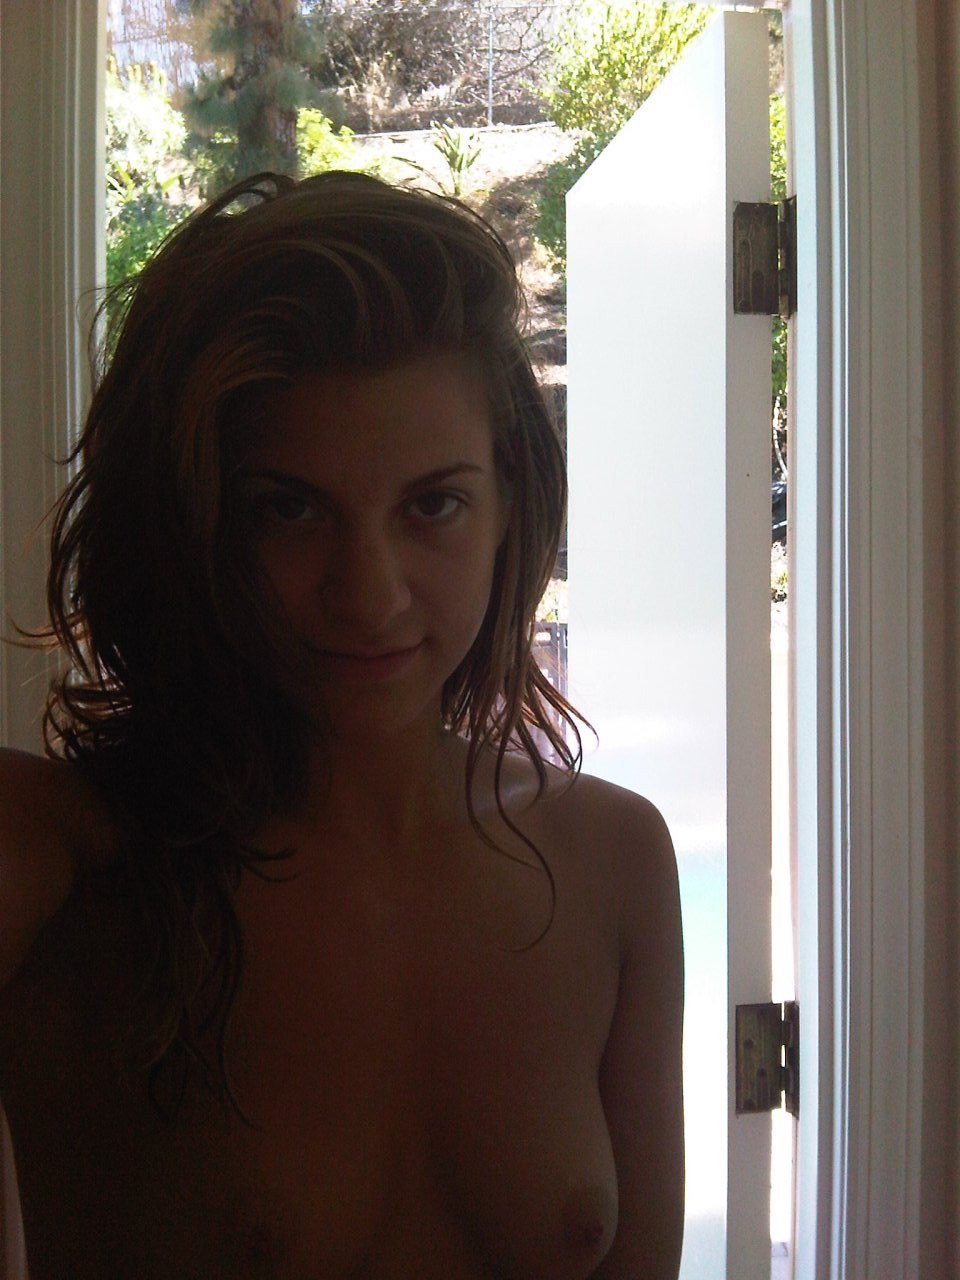 Rachel mccord nude